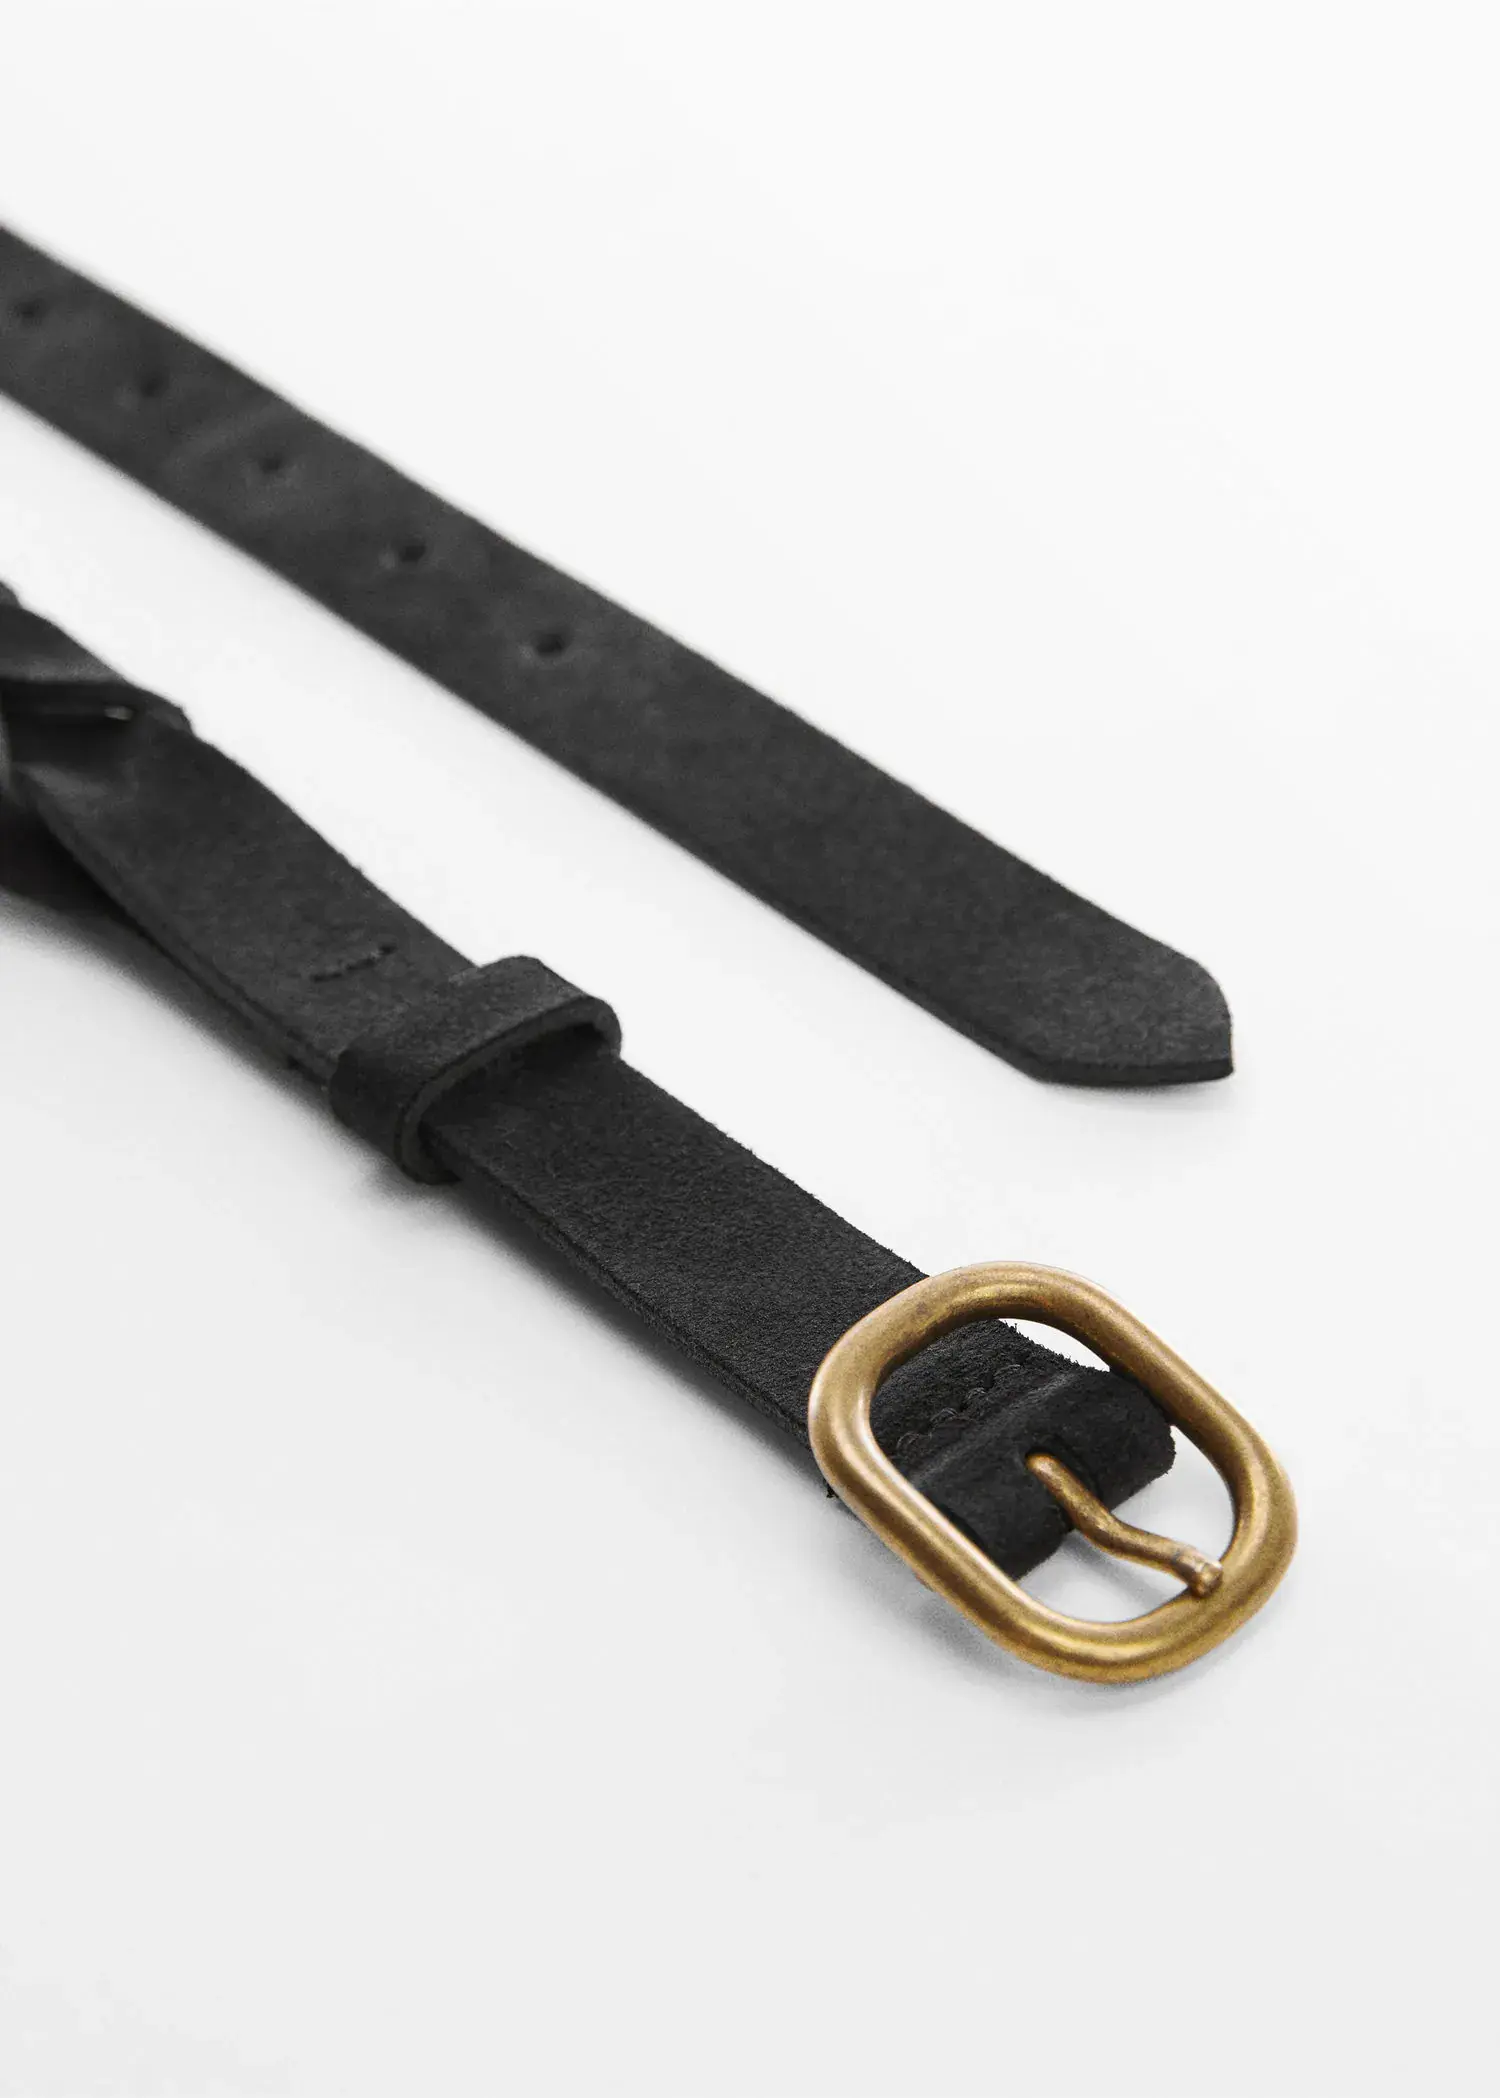 Mango Leather belt with worn buckle . 3